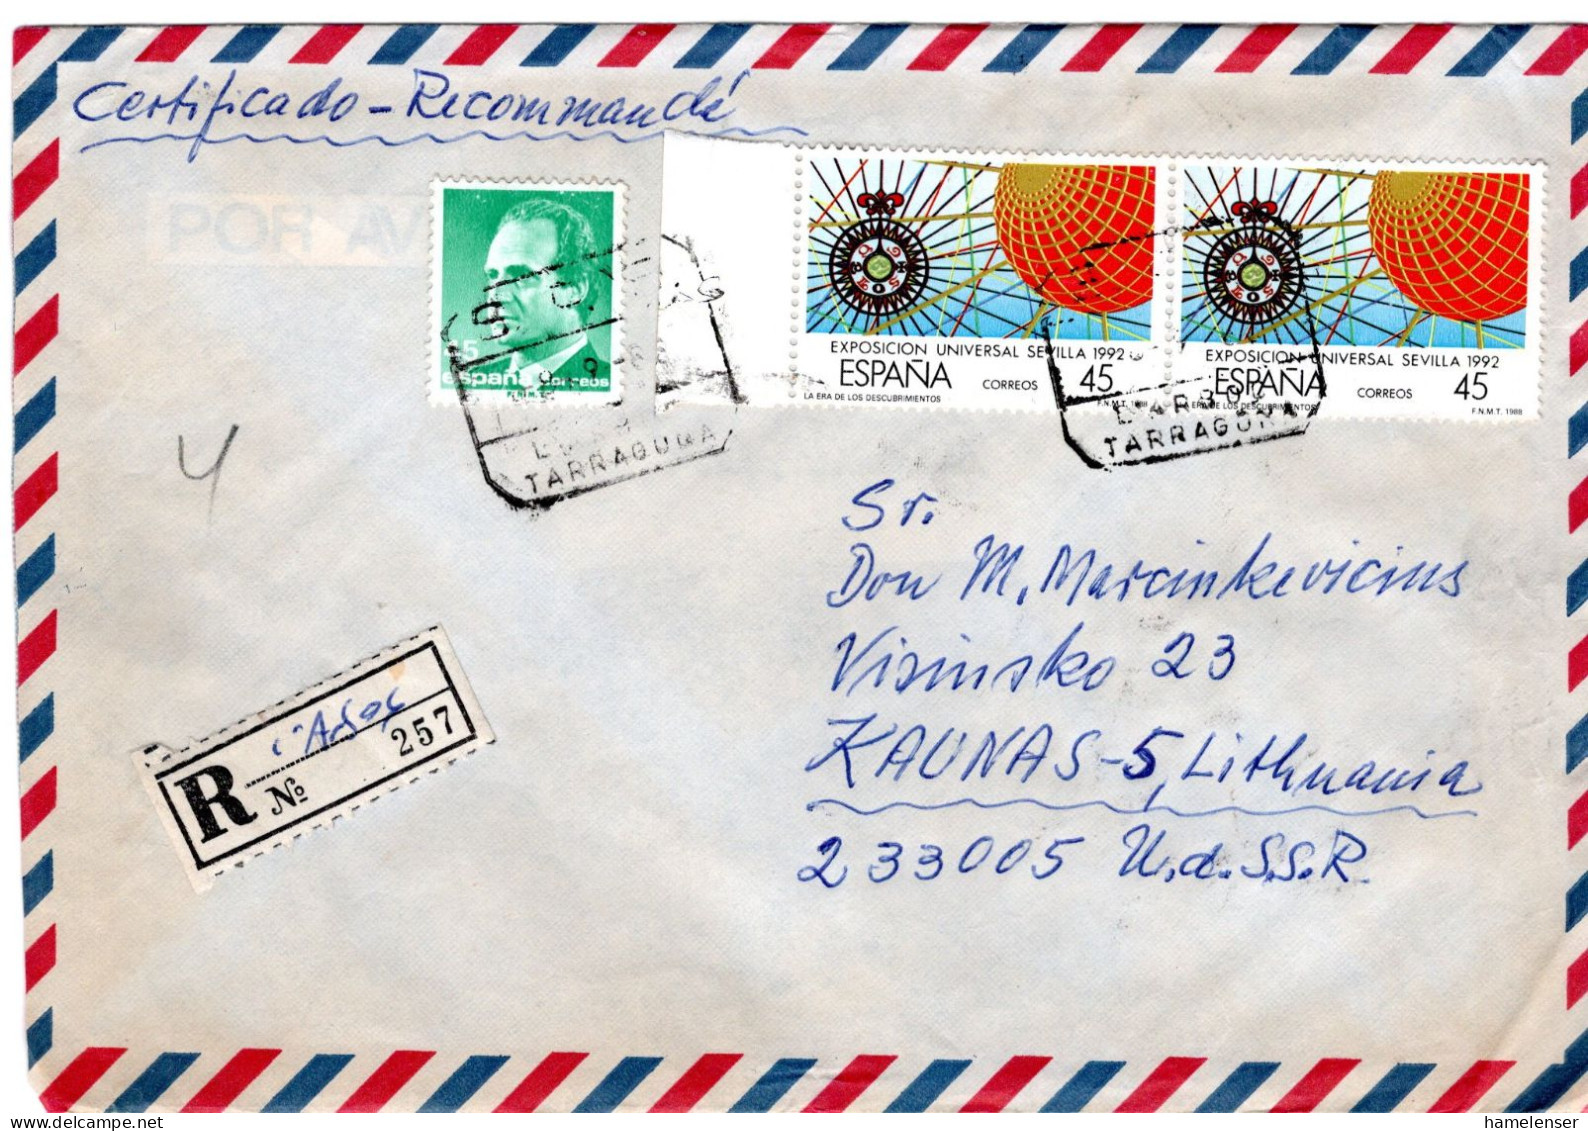 61809 - Spanien - 1988 - 2@45Ptas EXPO '92 MiF A R-LpBf TARRAGONA -> KAUNAS (UdSSR), U Etw Verfaerbt - Covers & Documents